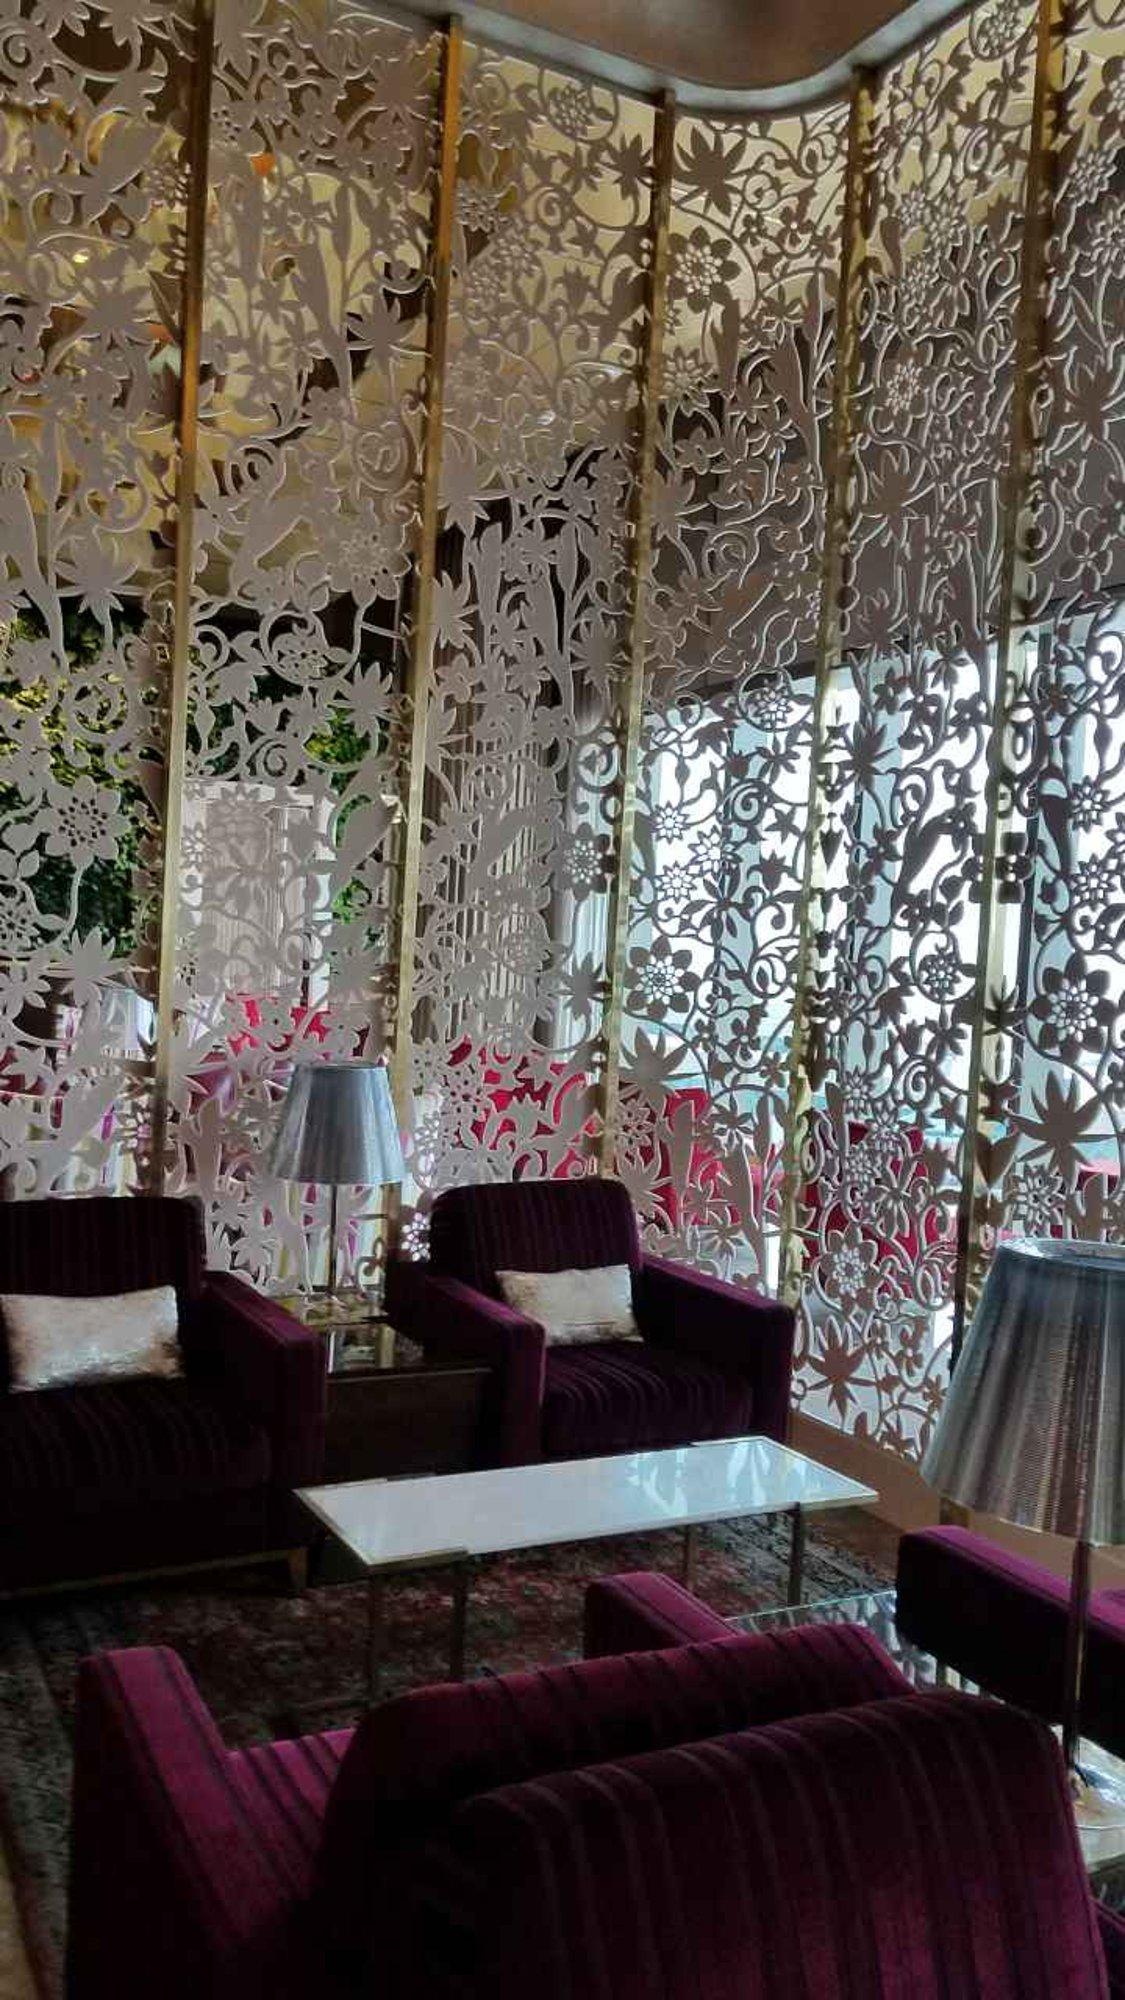 Adani Lounge (International West Wing) image 25 of 60